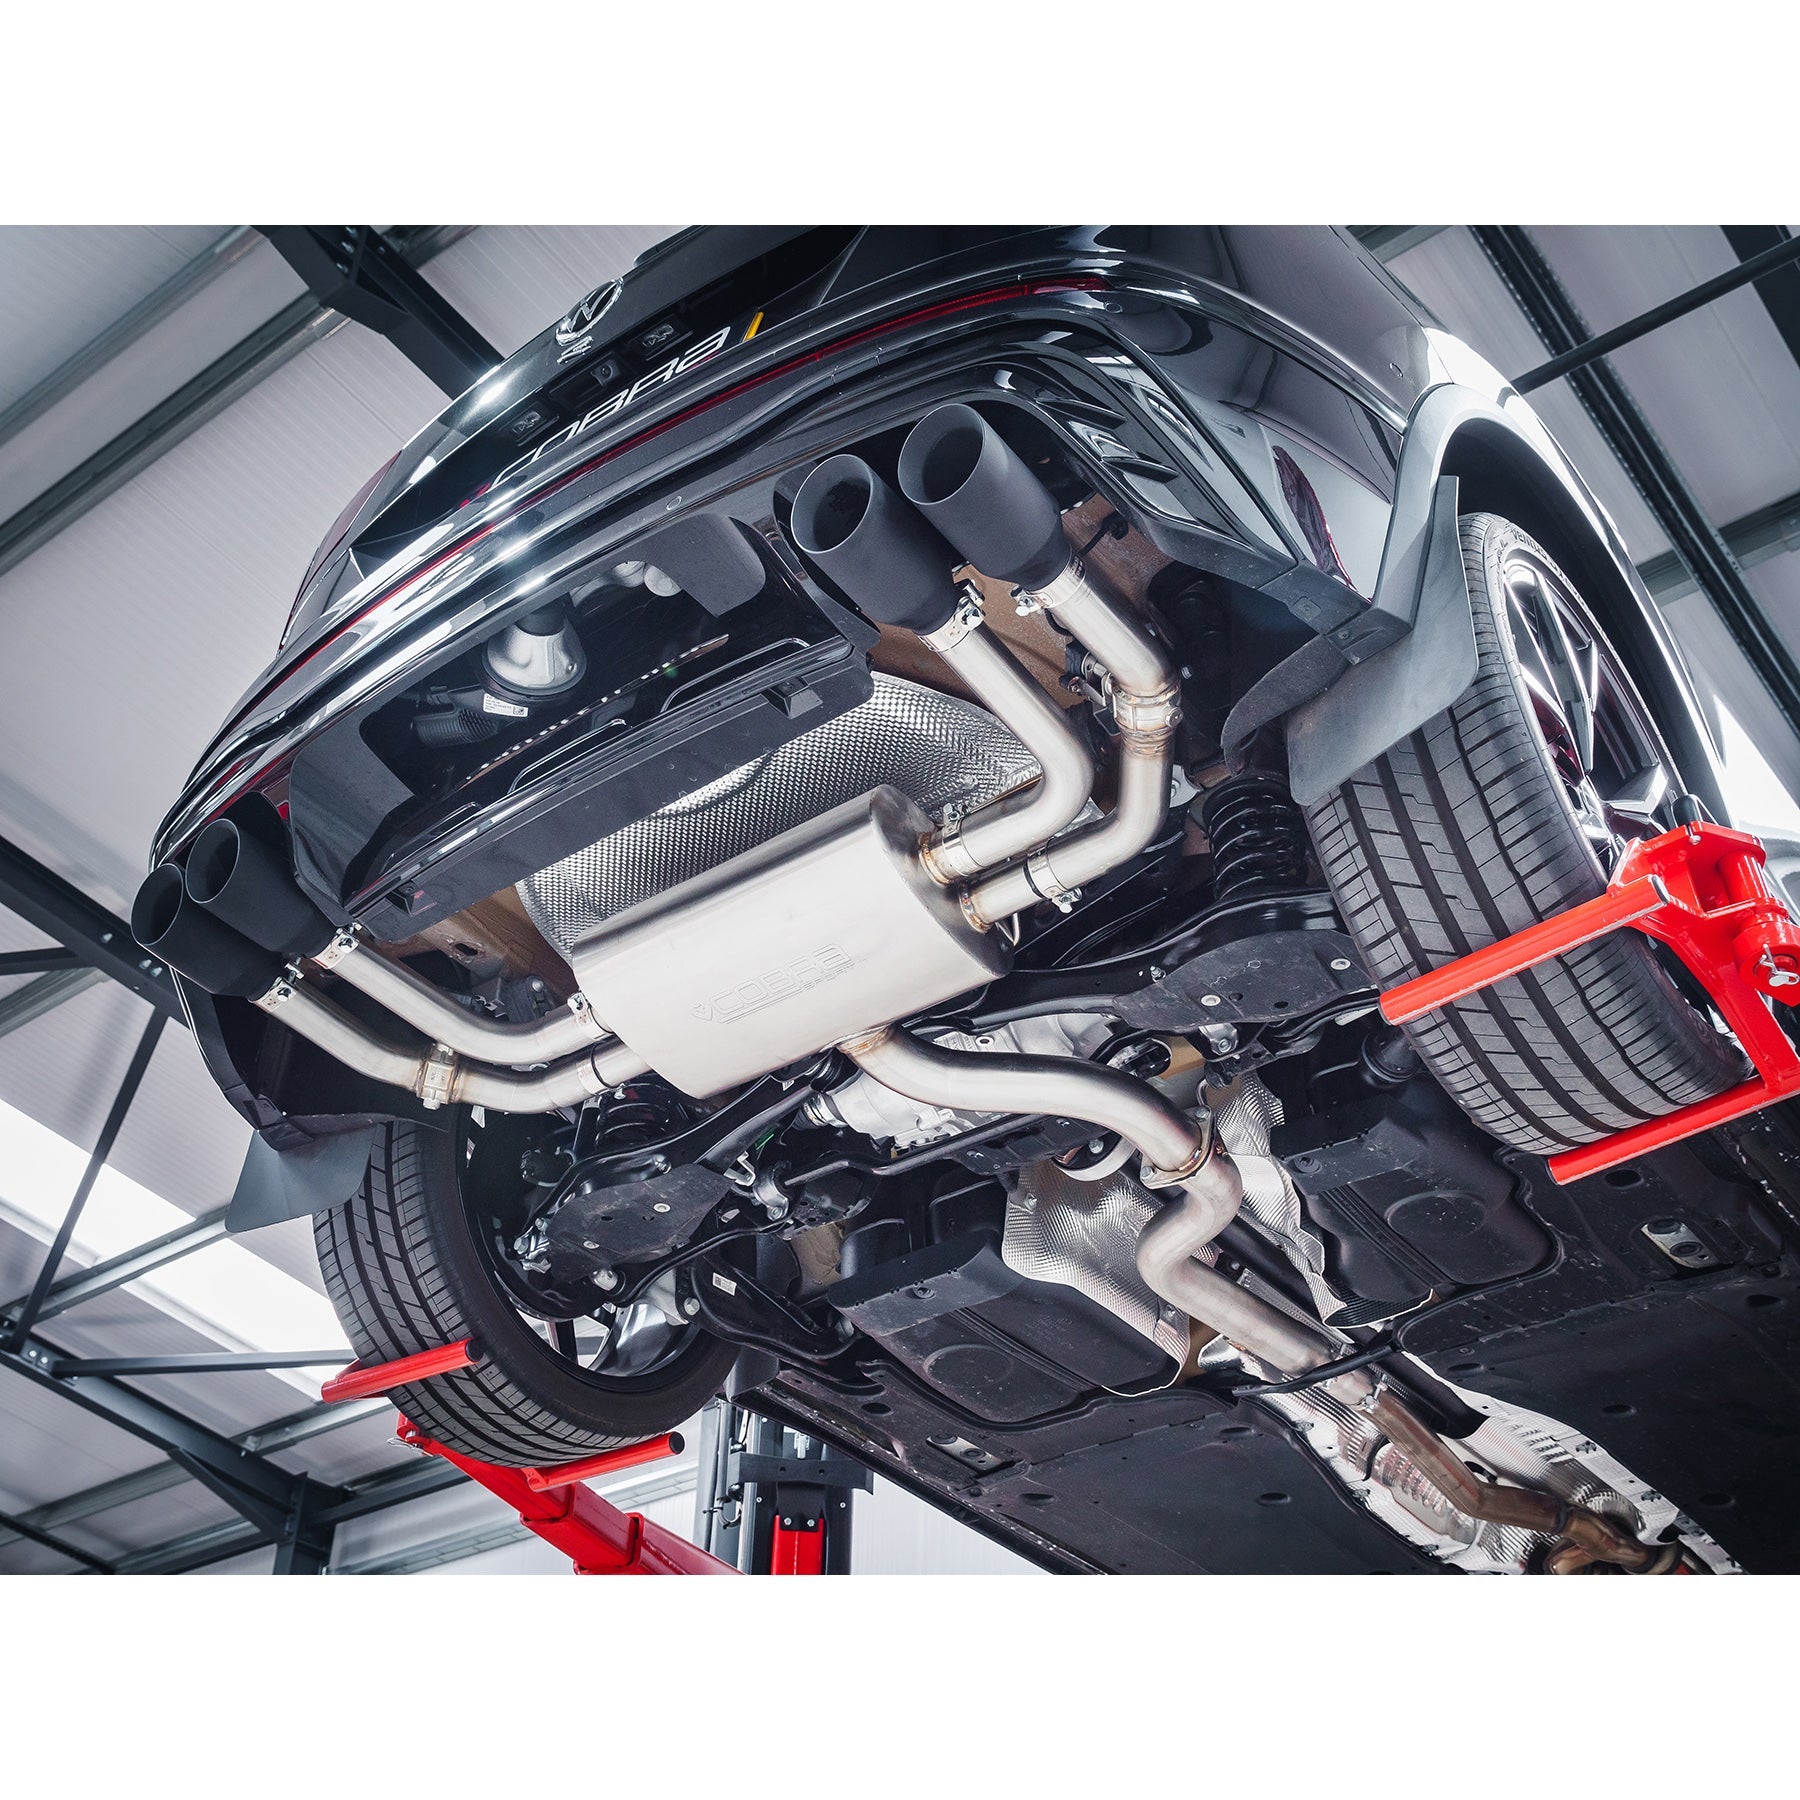 VW Tiguan R (21>) 2.0 TSI GPF Back Performance Exhaust - Wayside Performance 